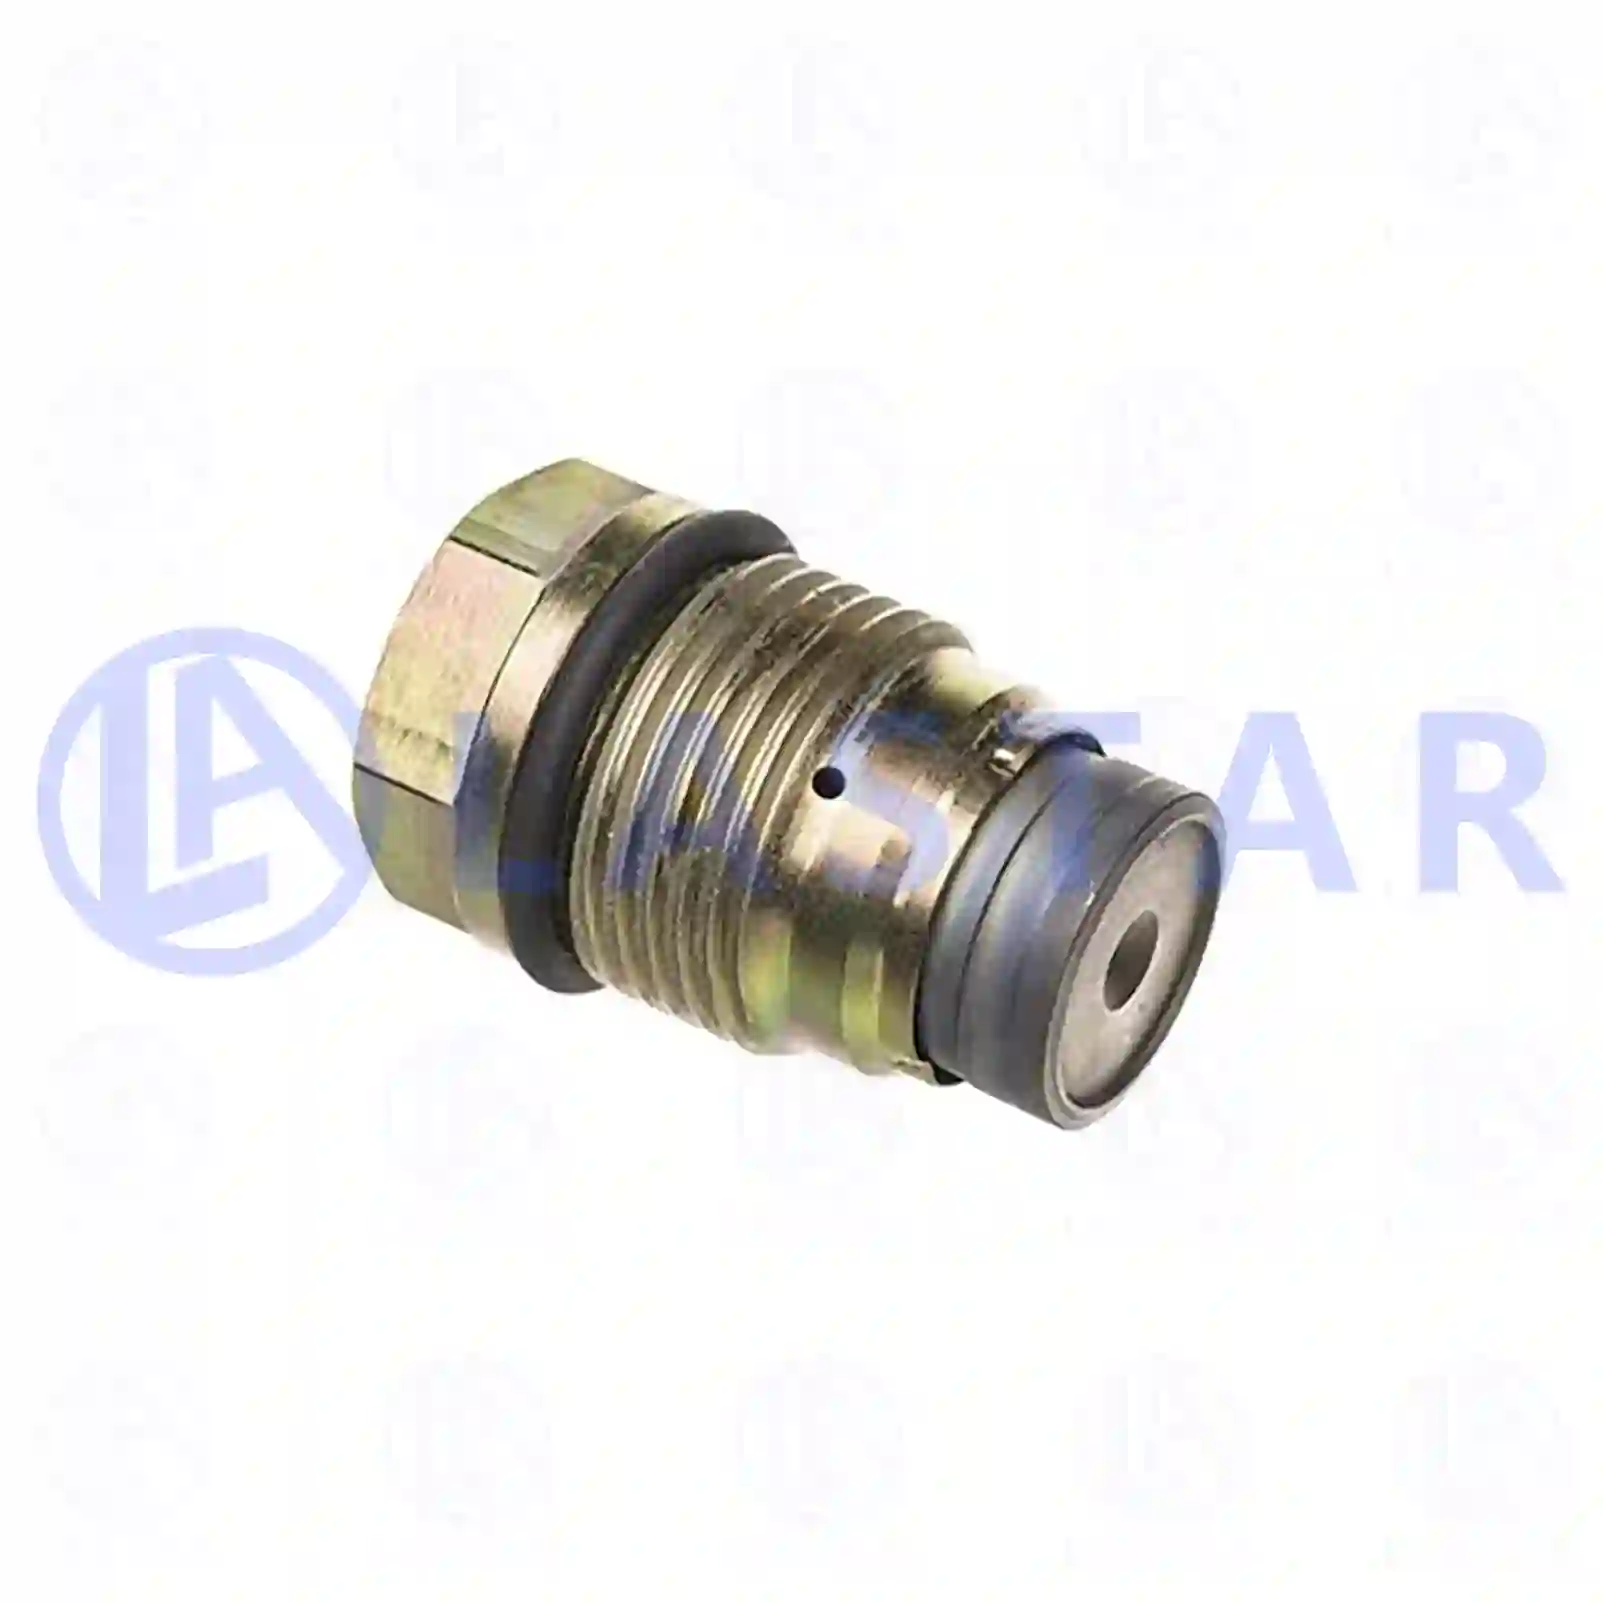 Pressure limiting valve, Common Rail, 77723205, 42562997, 504088436, 51103040278, 51103040291, 7420793590, 20793590, 3588337, 3884350, 07W133035, ZG10492-0008 ||  77723205 Lastar Spare Part | Truck Spare Parts, Auotomotive Spare Parts Pressure limiting valve, Common Rail, 77723205, 42562997, 504088436, 51103040278, 51103040291, 7420793590, 20793590, 3588337, 3884350, 07W133035, ZG10492-0008 ||  77723205 Lastar Spare Part | Truck Spare Parts, Auotomotive Spare Parts